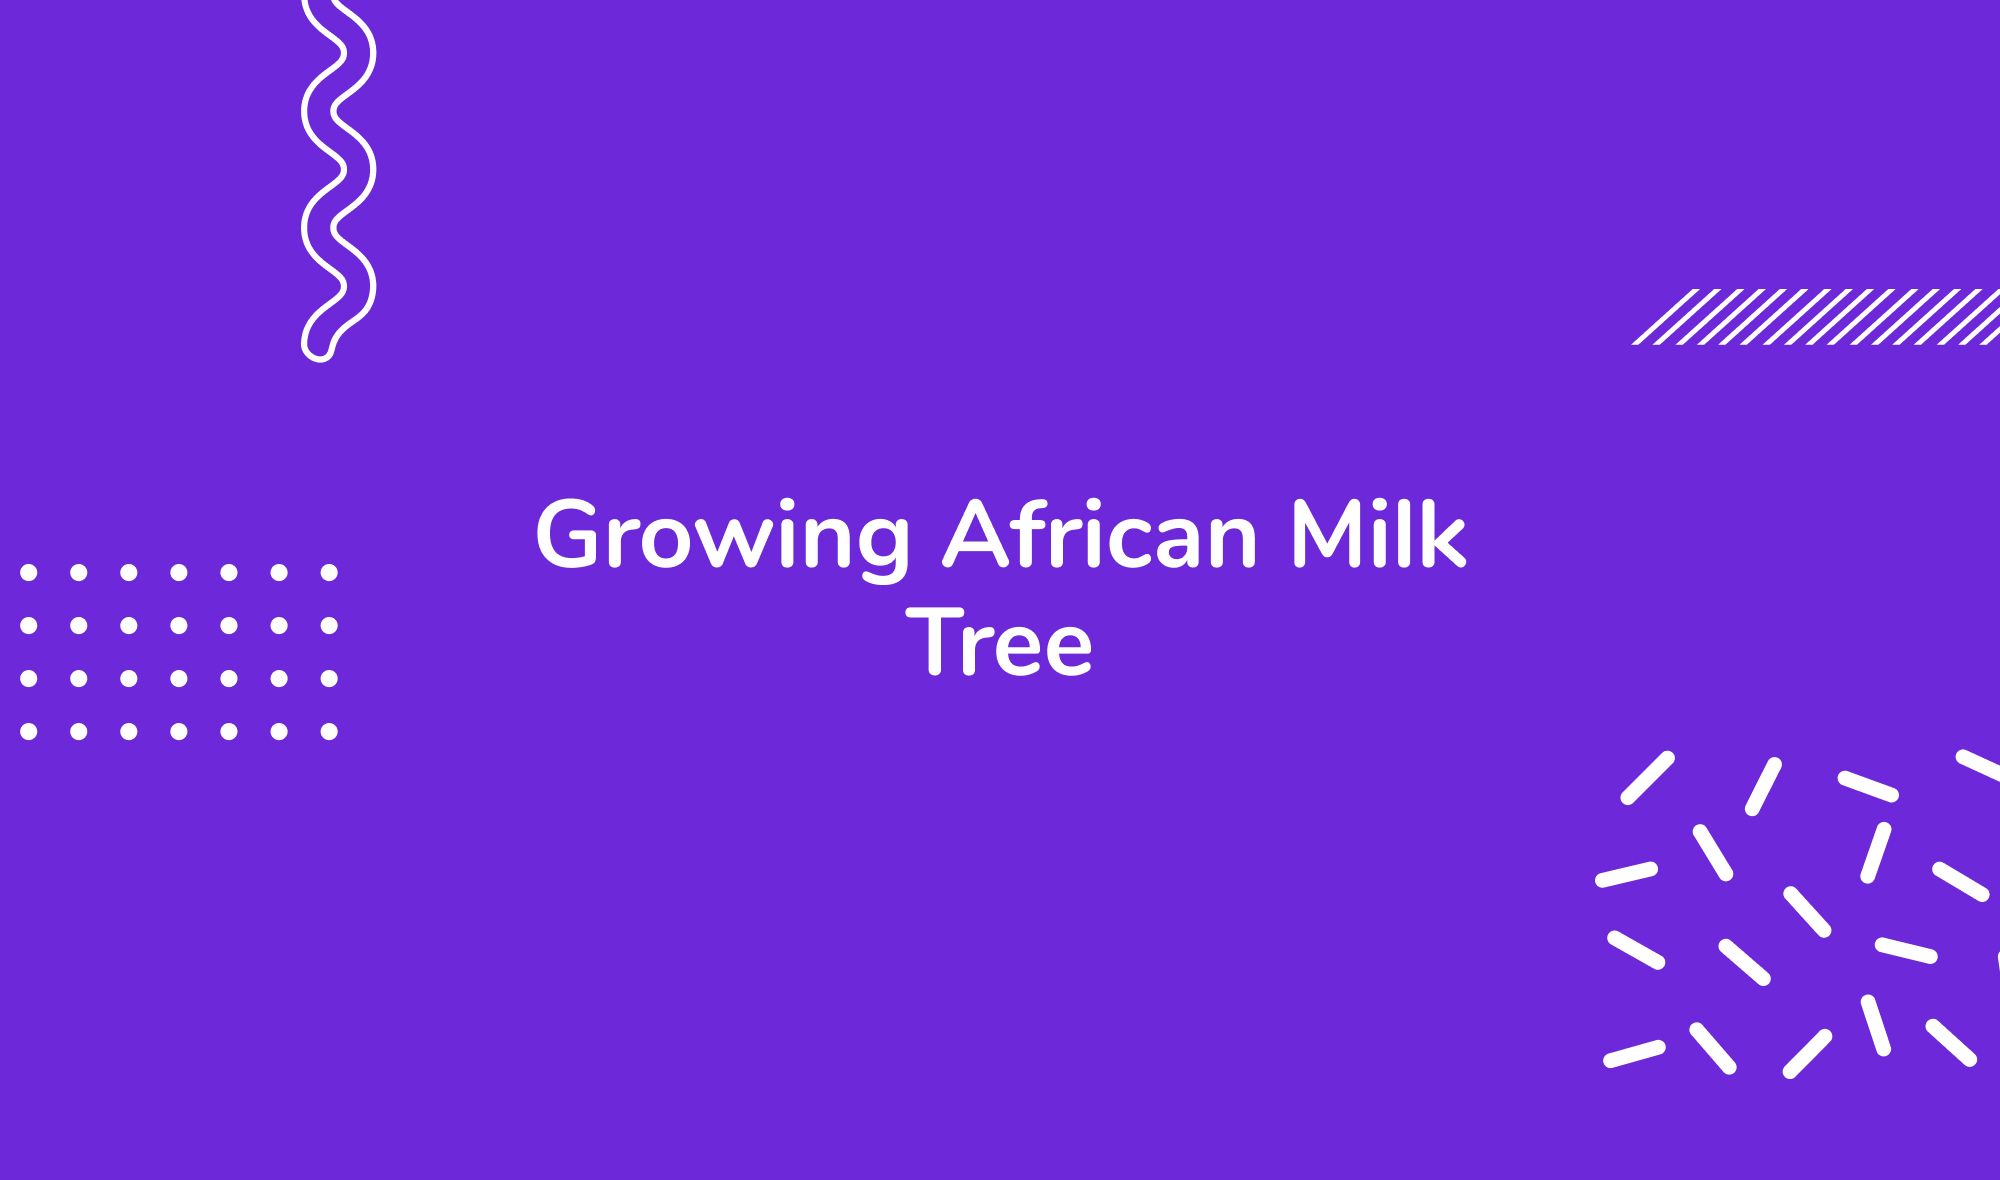 Growing African Milk Tree